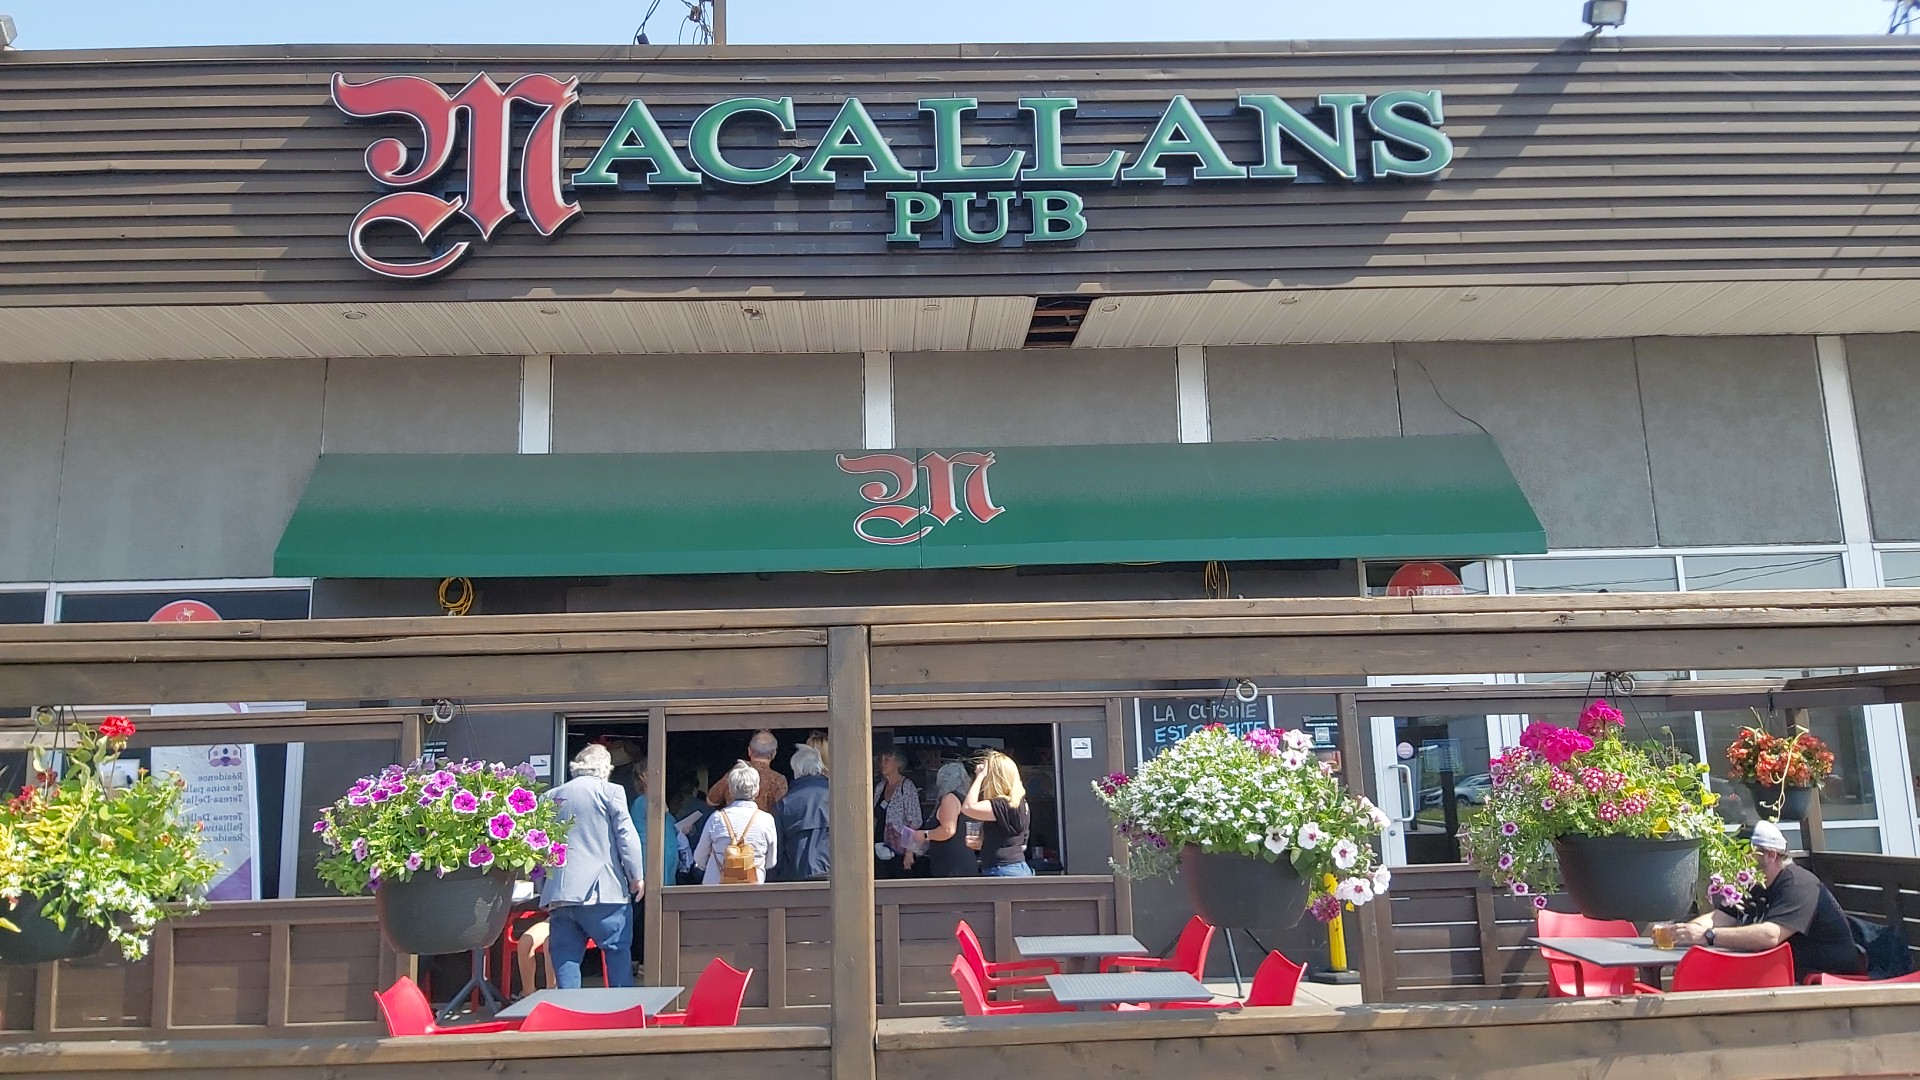 Macallan's Pub